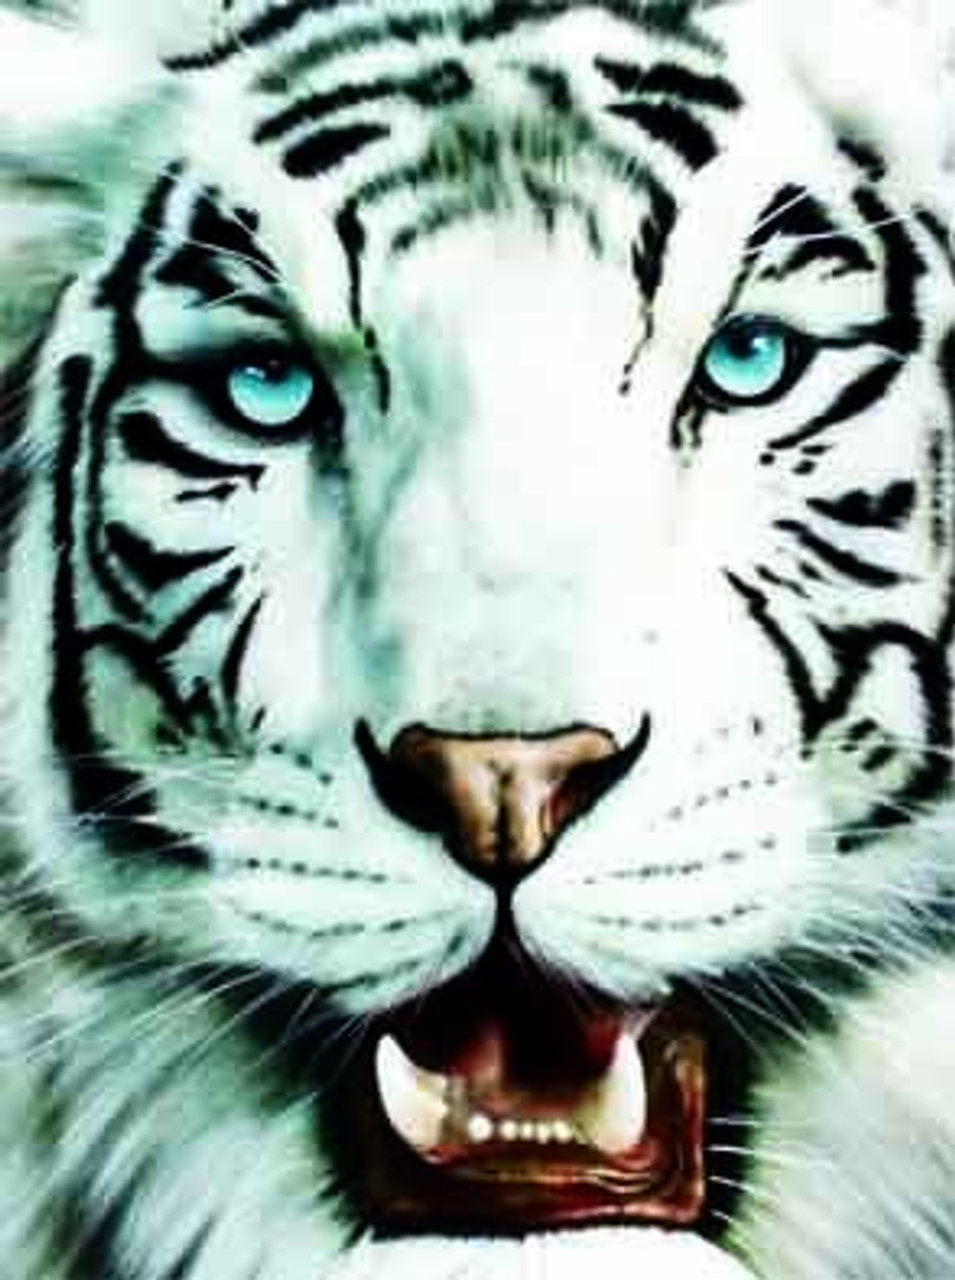 Snow Tiger face 3D Lenticular Image 40cm x 30cm unframed 